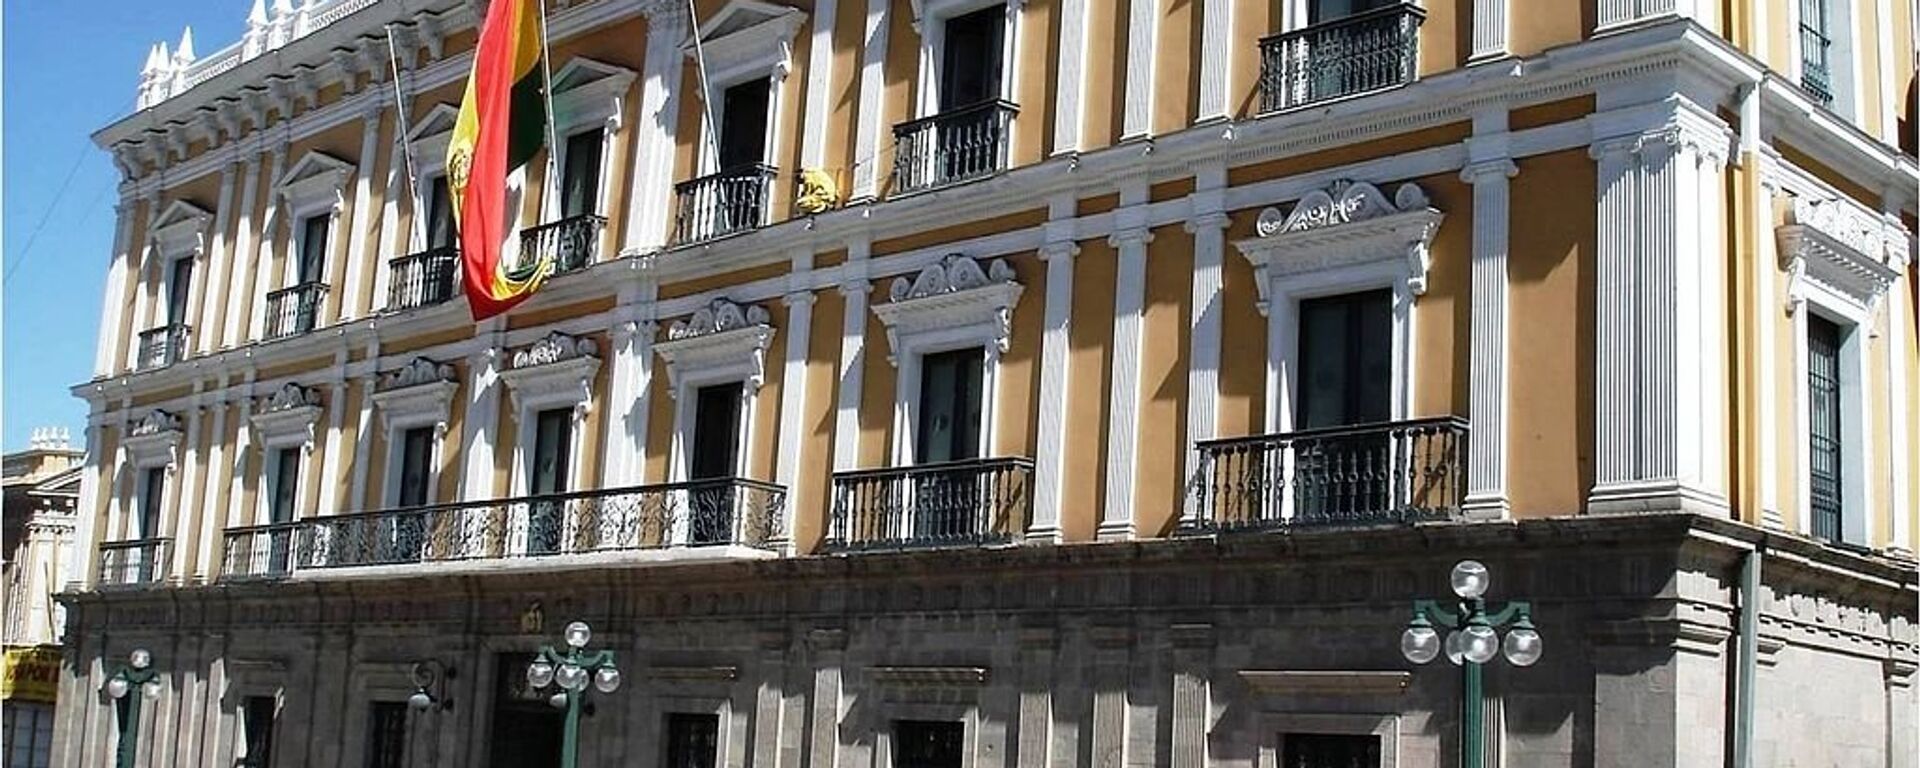 Palacio de Gobierno en La Paz, Bolivia. - Sputnik Mundo, 1920, 27.11.2020